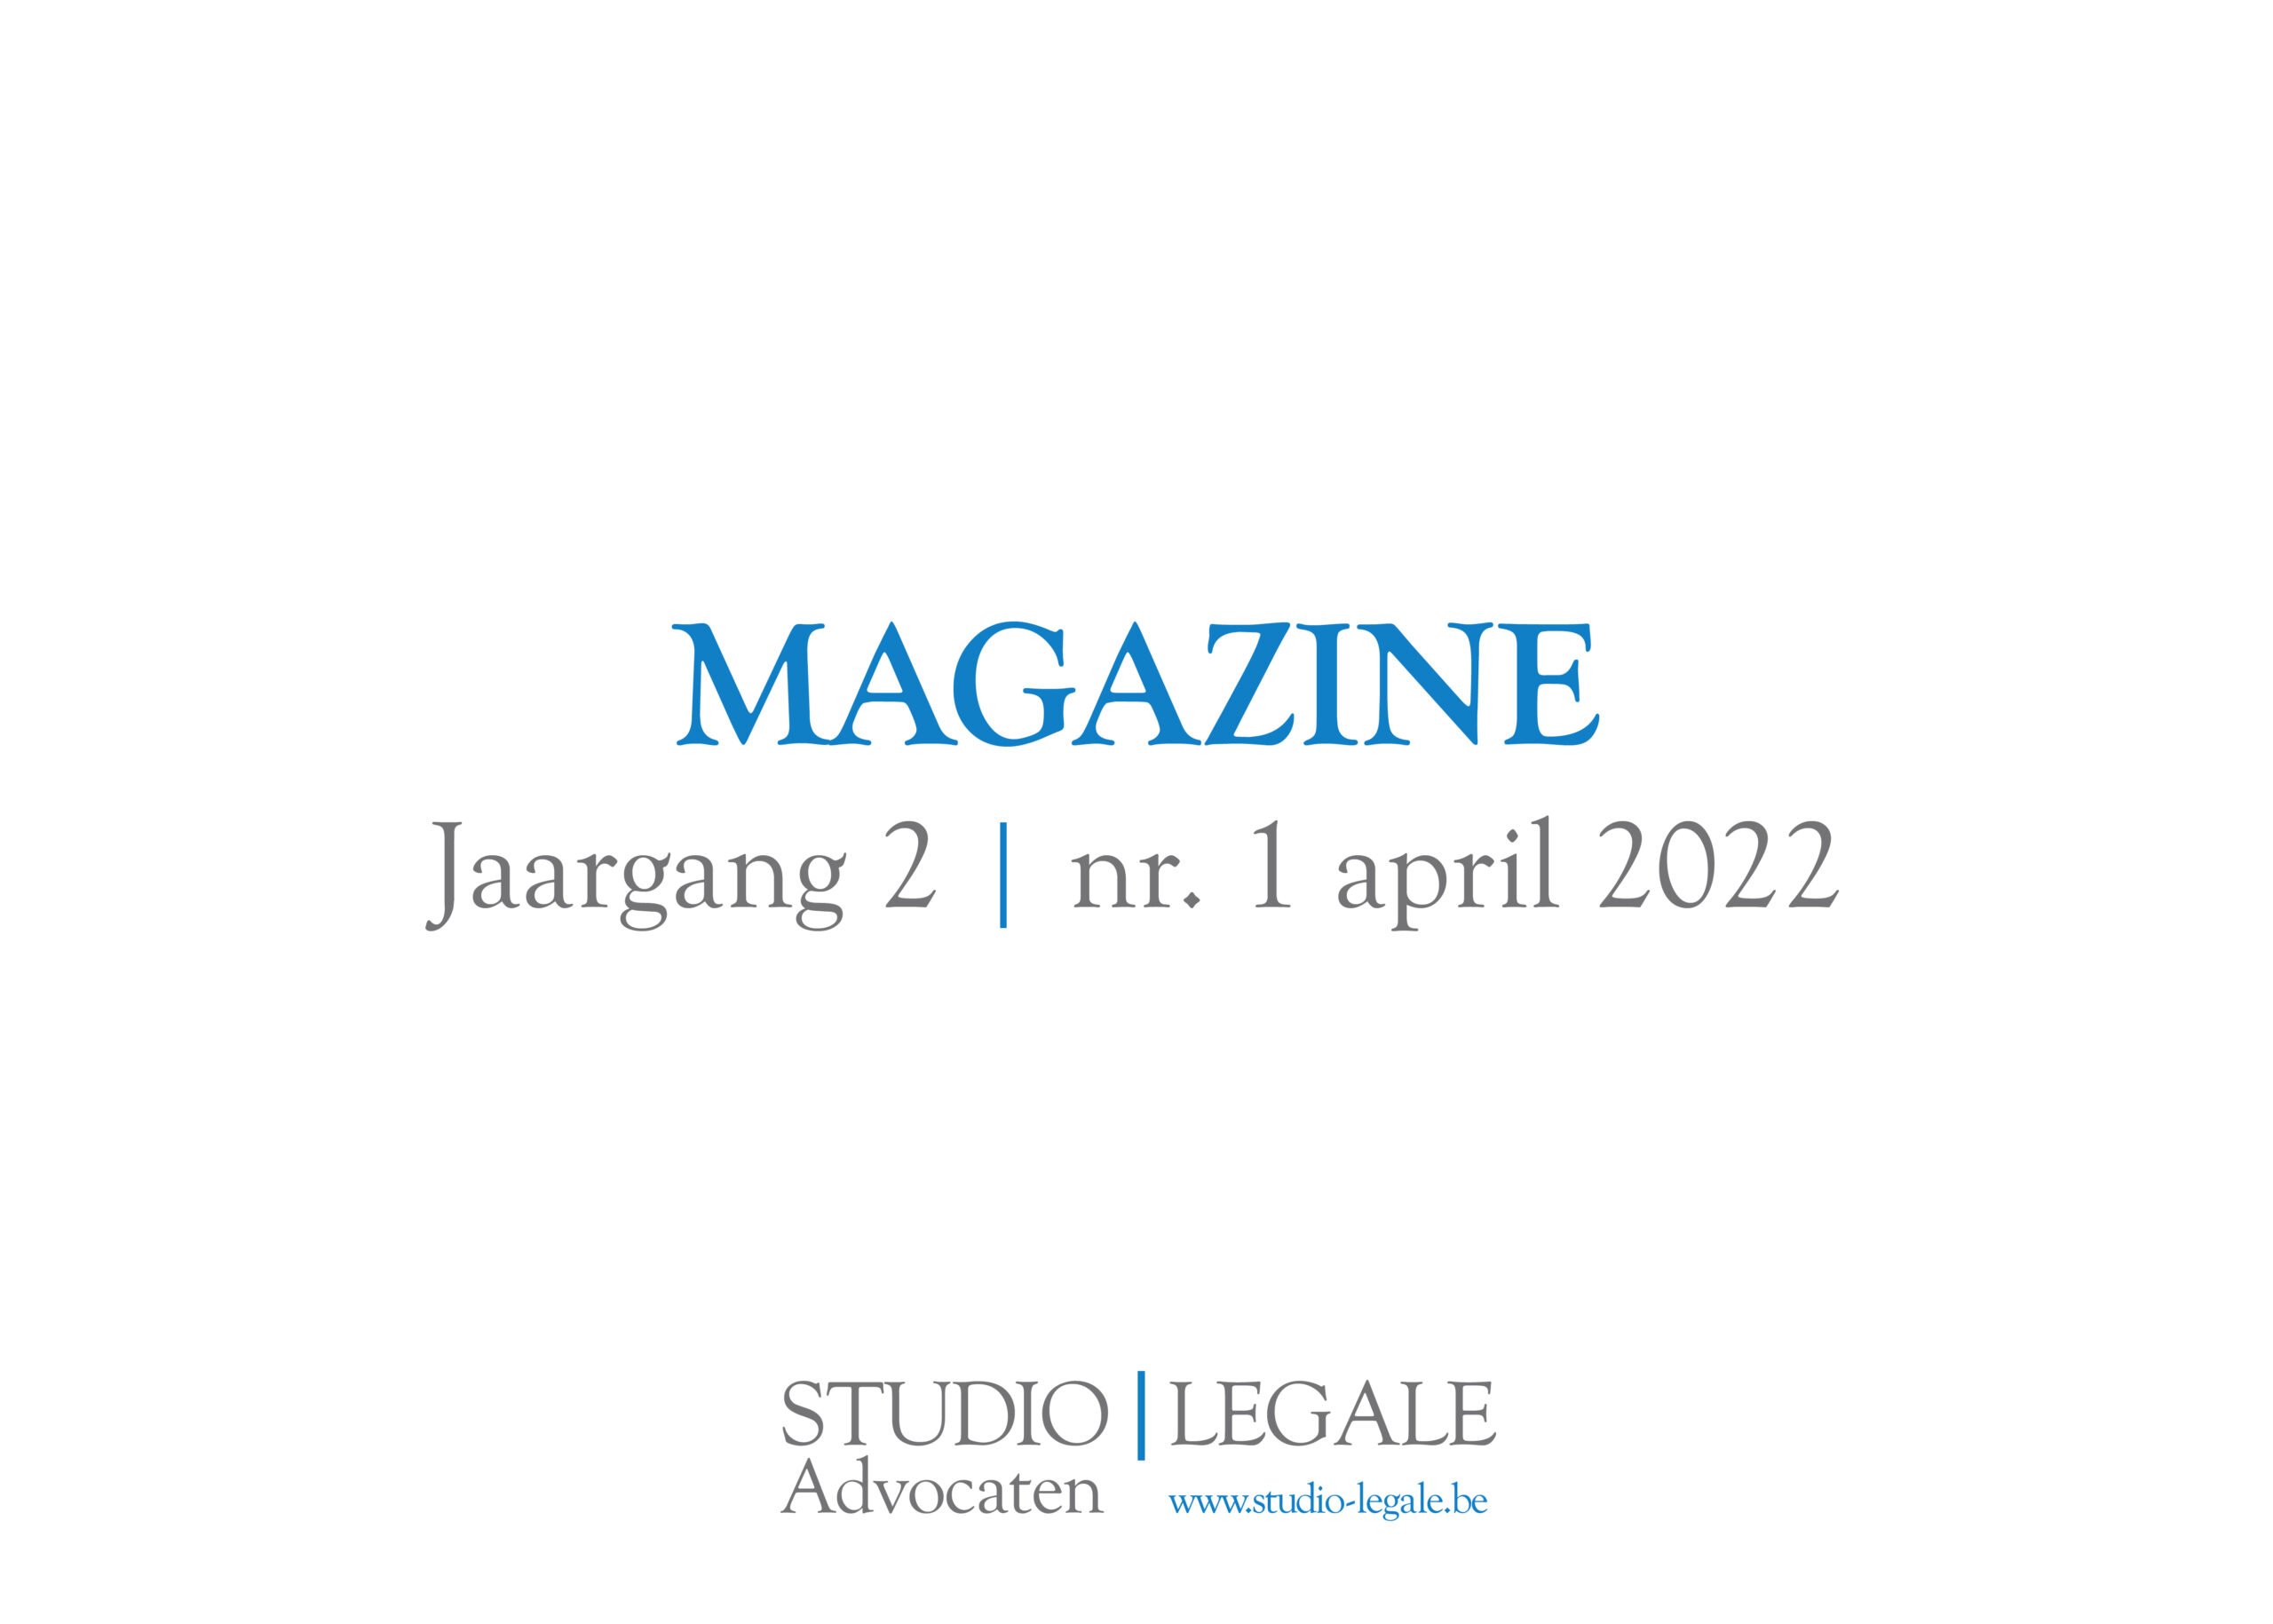 STUDIO | LEGALE Magazine | Jaargang 2 | nr. 1 april 2022